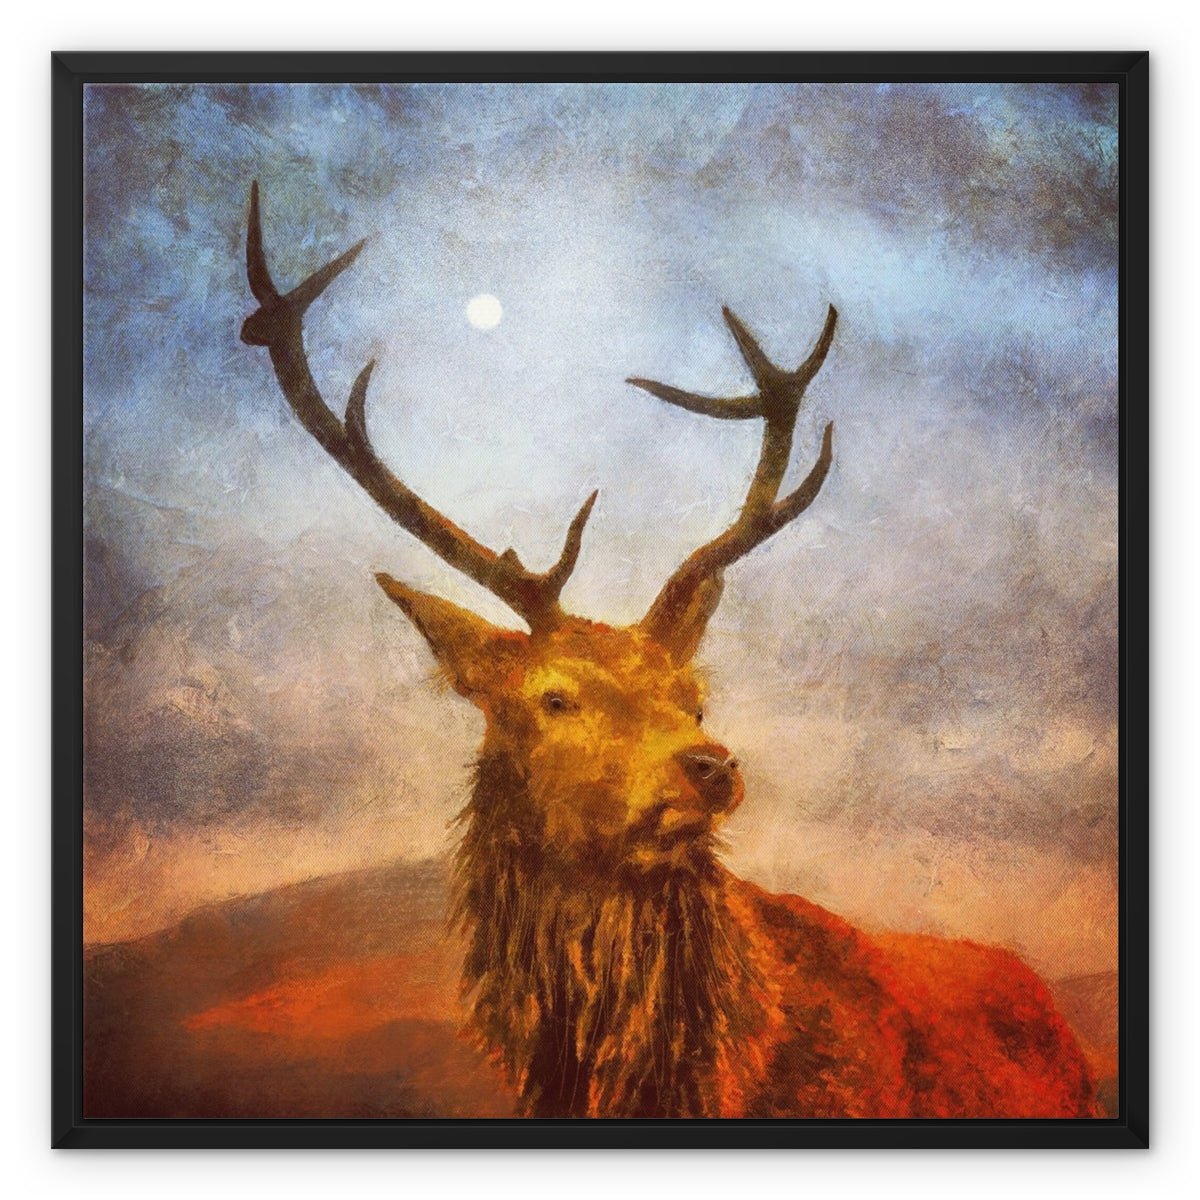 A Moonlit Highland Stag Painting | Framed Canvas From Scotland-Floating Framed Canvas Prints-Scottish Highlands & Lowlands Art Gallery-24"x24"-Black Frame-Paintings, Prints, Homeware, Art Gifts From Scotland By Scottish Artist Kevin Hunter